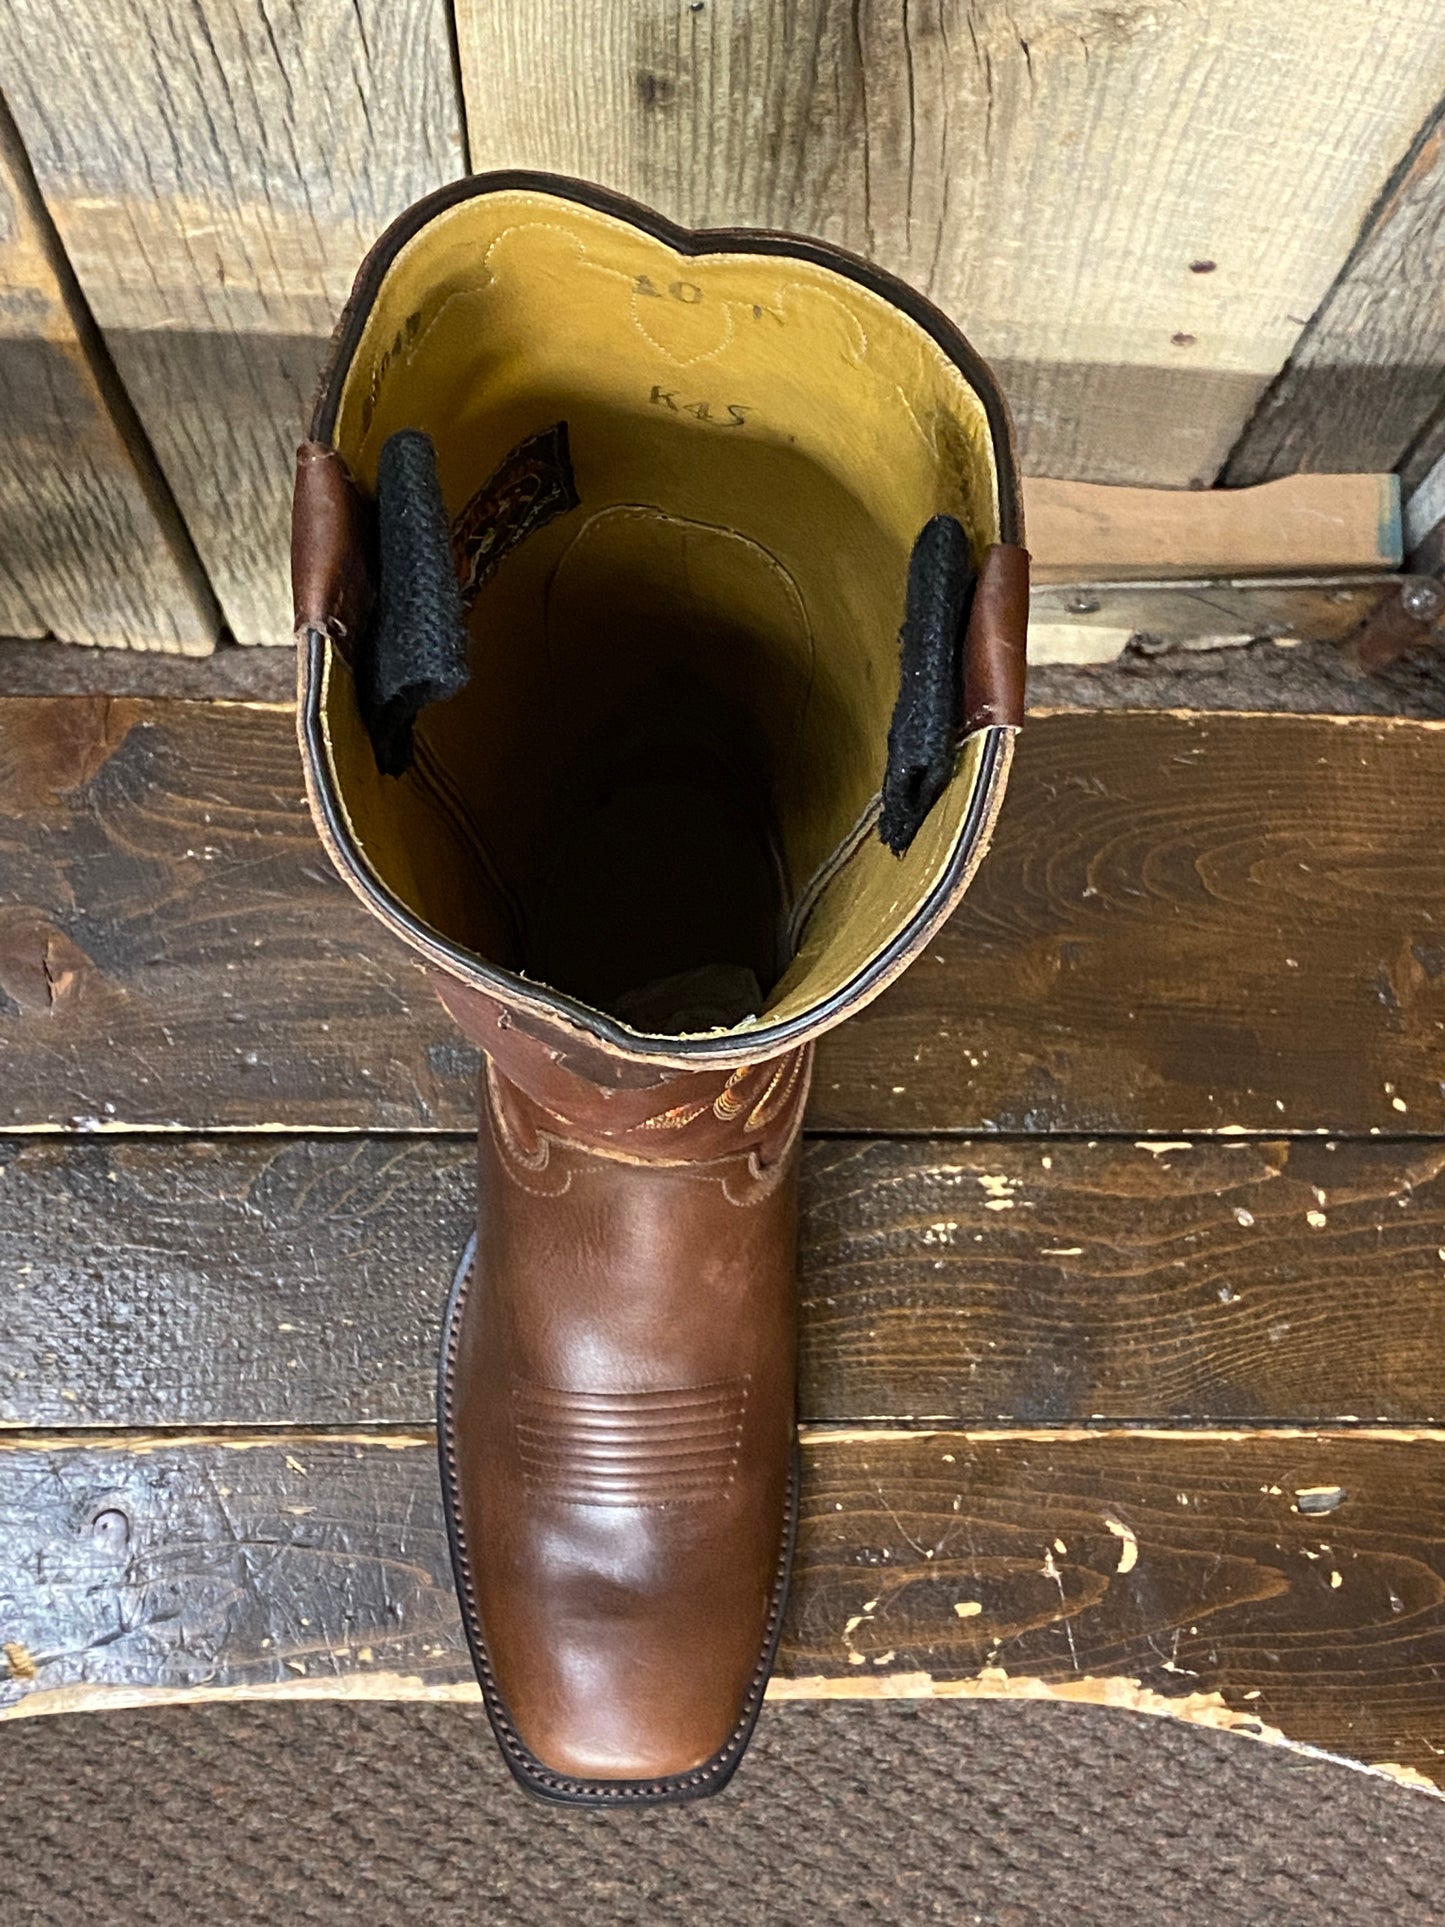 Honcho Solano® Briscoe Full Grain Leather Tall Top Cowboy Boots